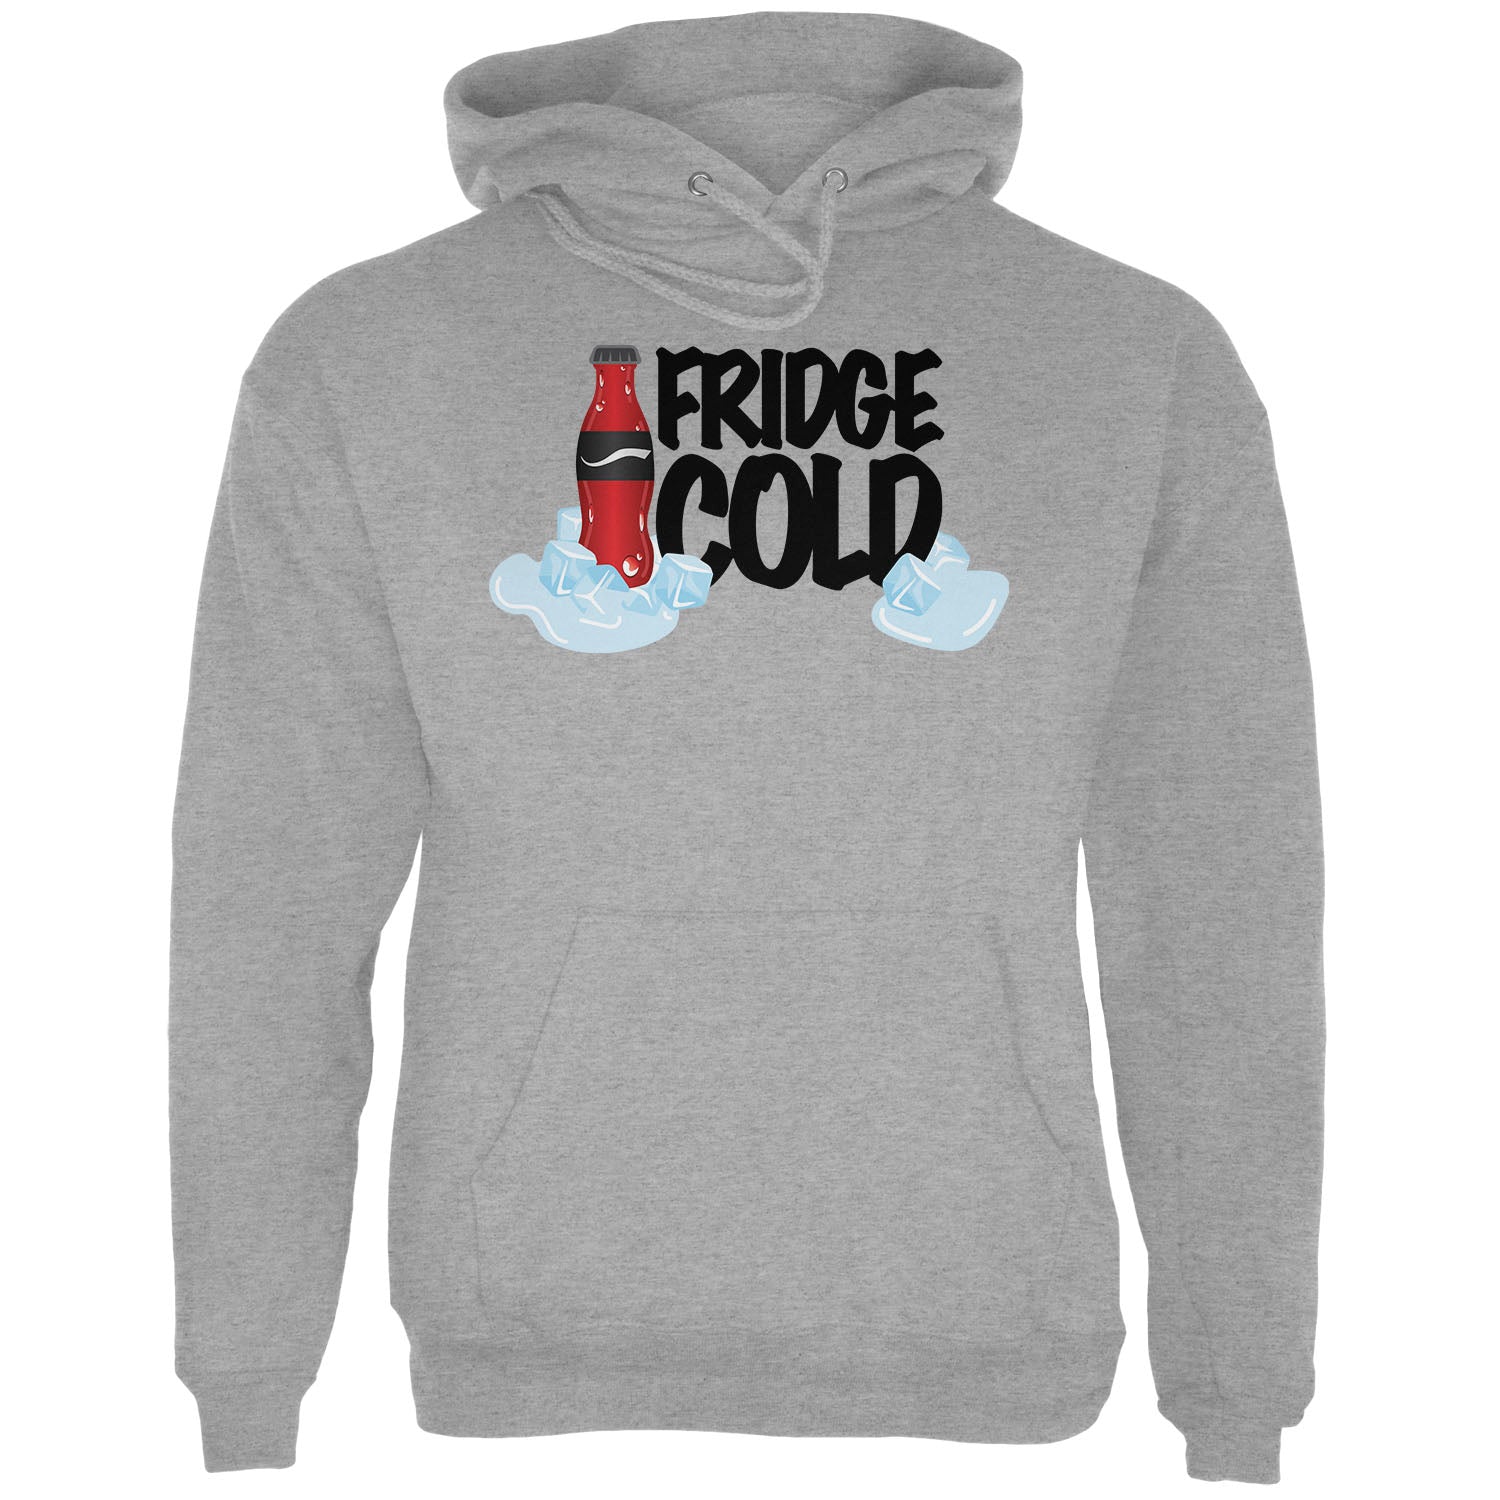 Fridge Cold Hooded Sweatshirt